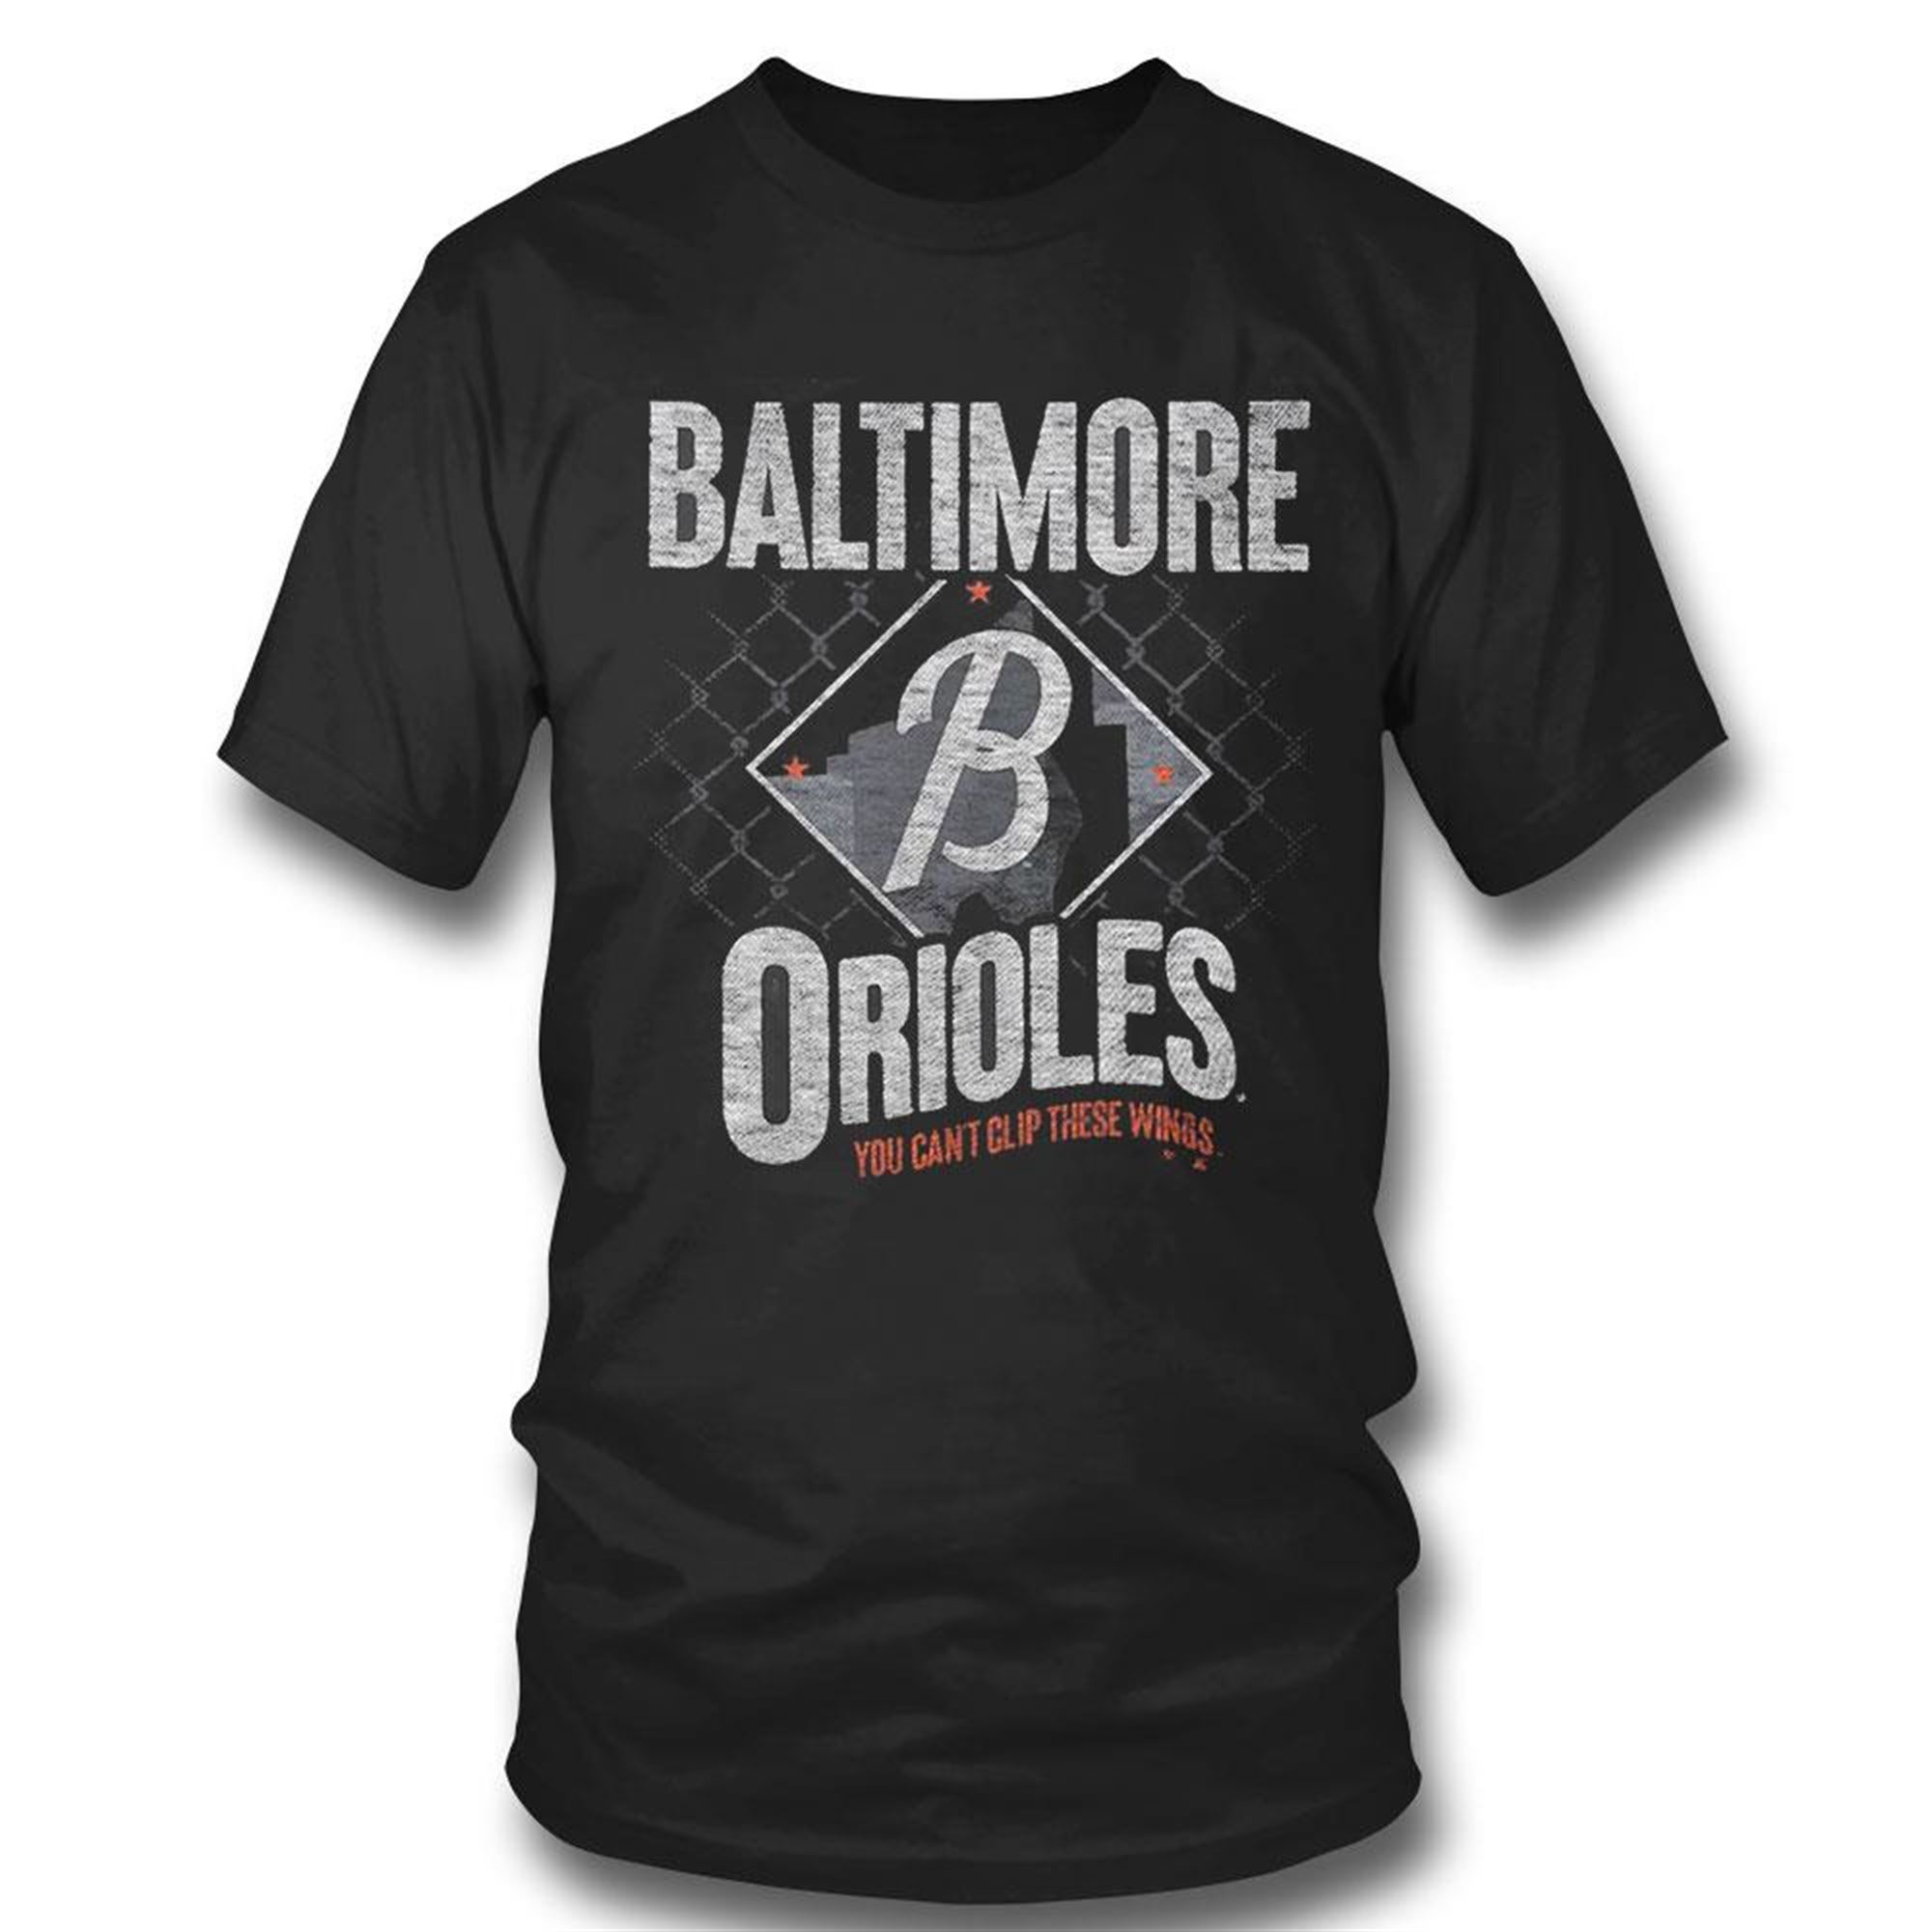 Men's Baltimore Orioles Black Local Dog T-Shirt